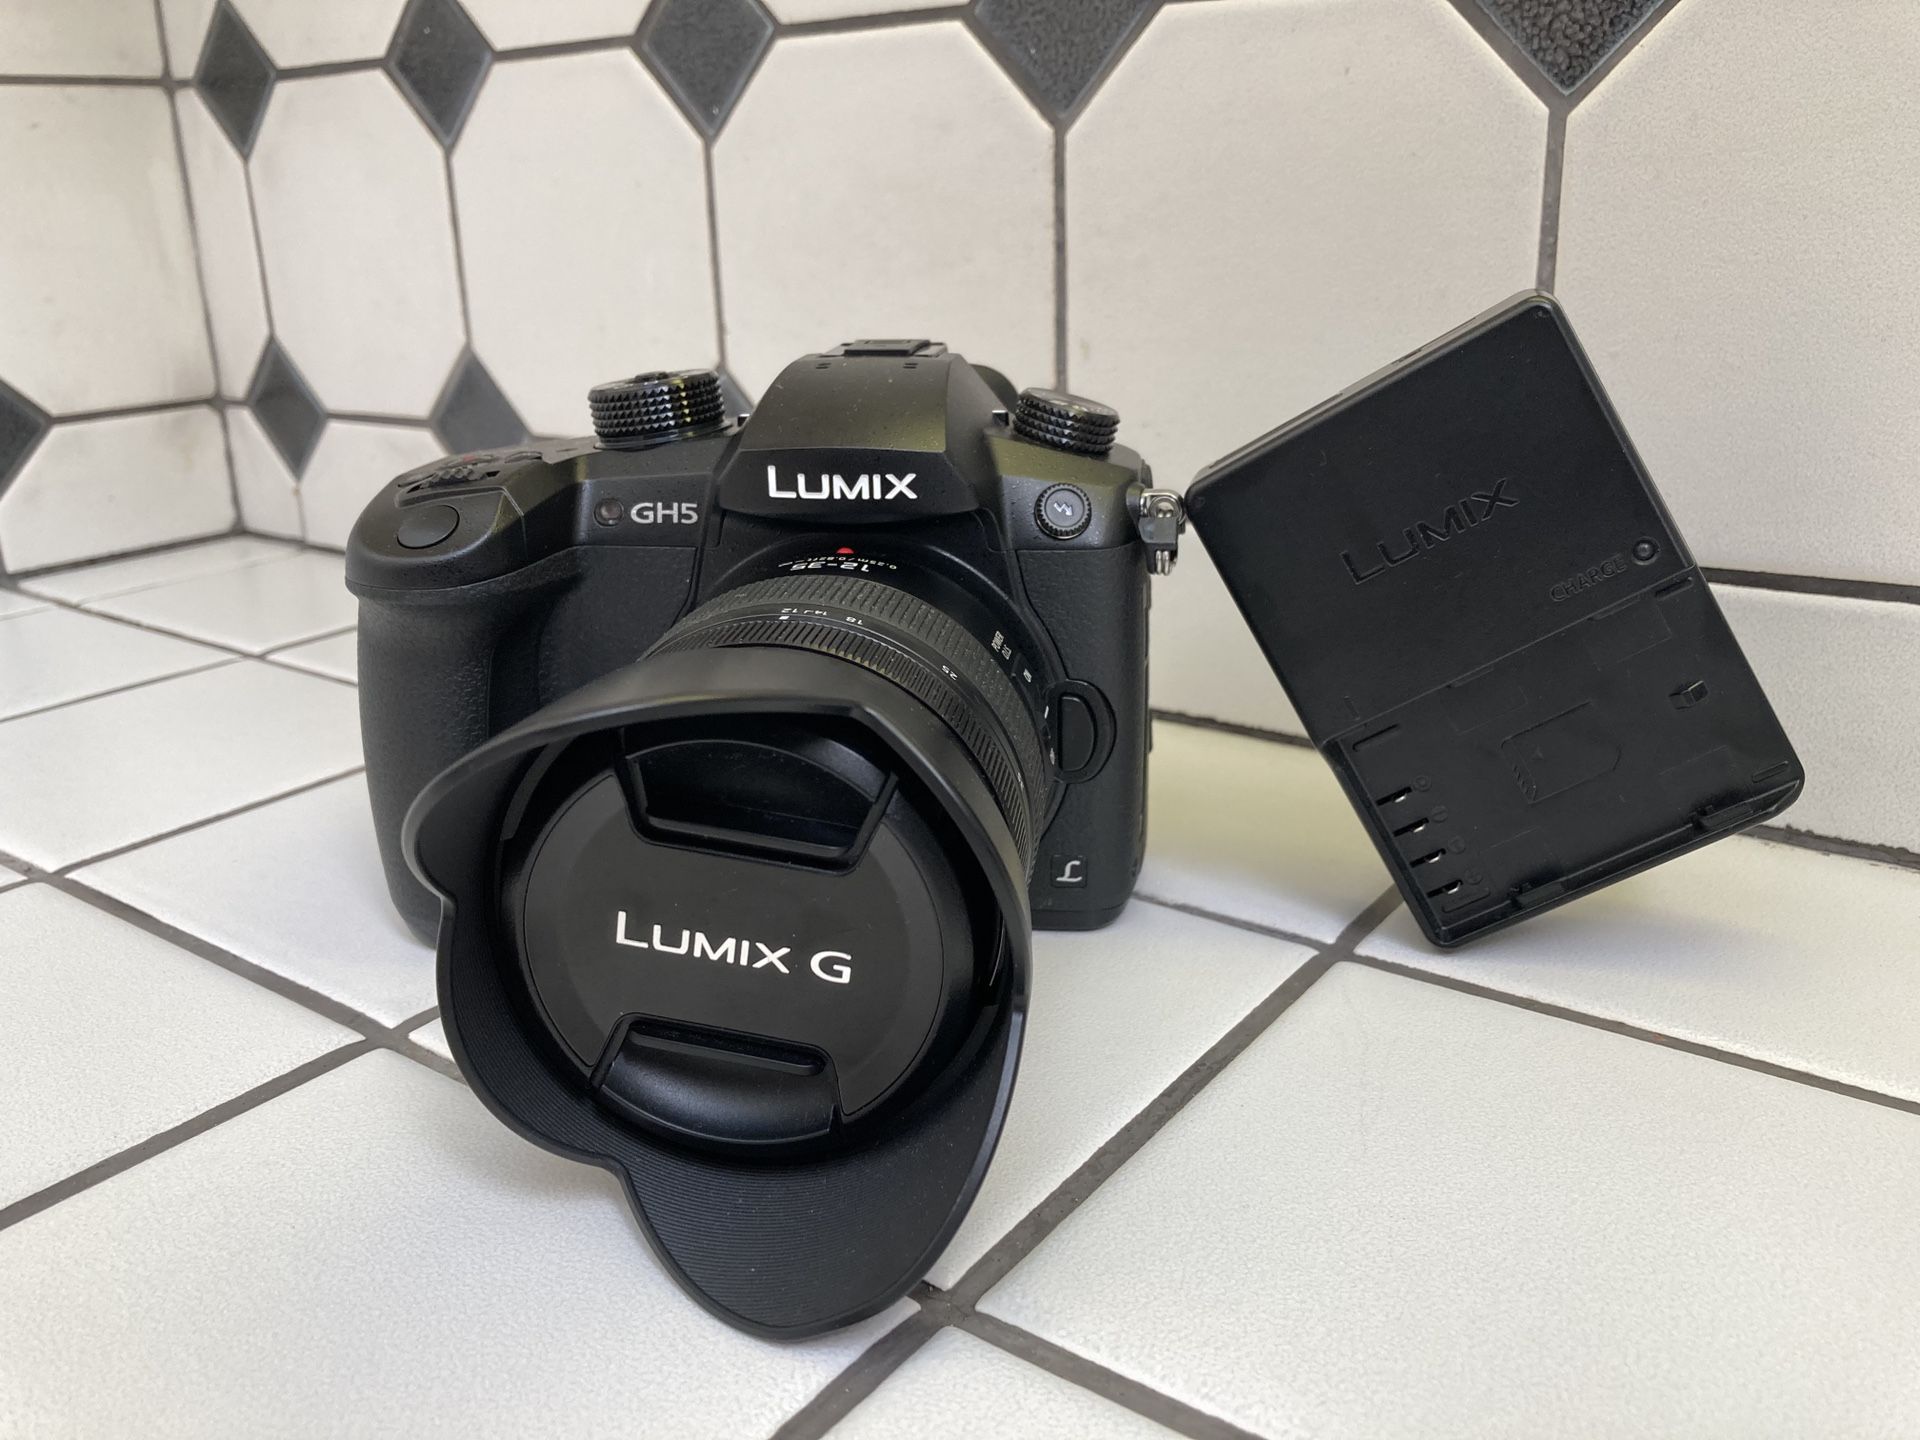 Lumix gh5 w/ 12-35mm lens